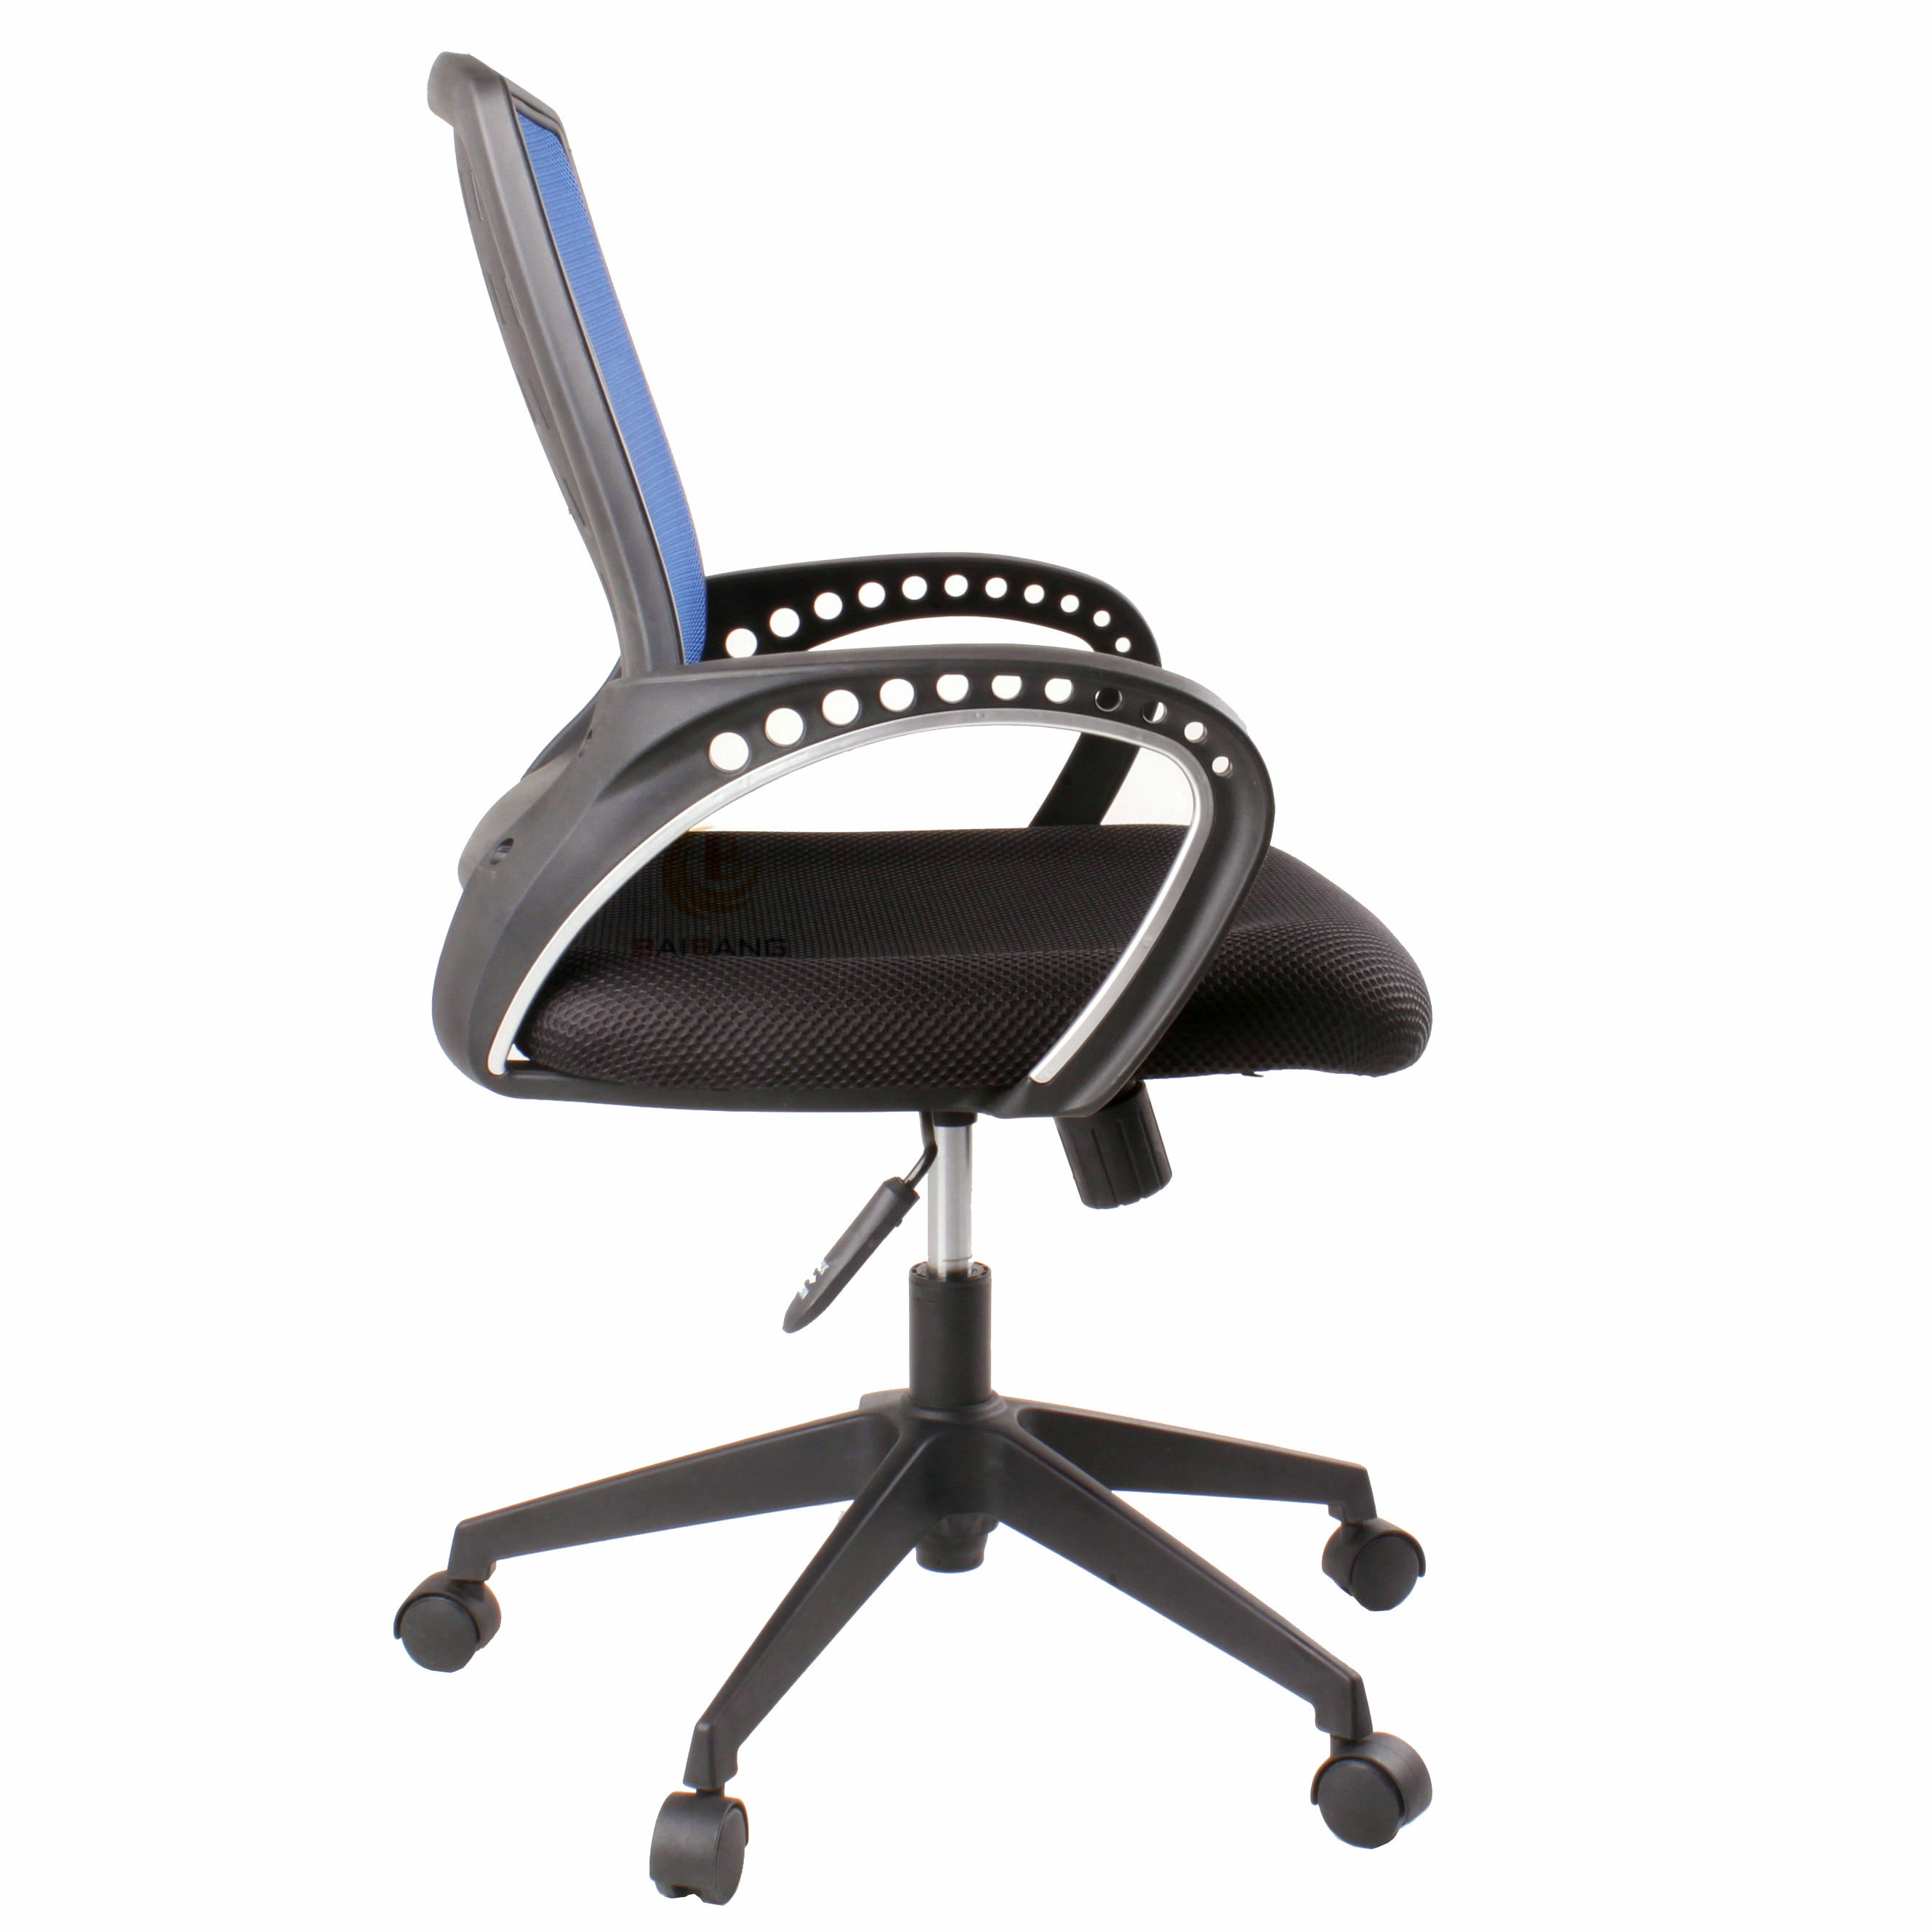 BAIBANG 塑料ABS固定扶手尼龙脚铝合金脚钢制脚布艺 电脑椅